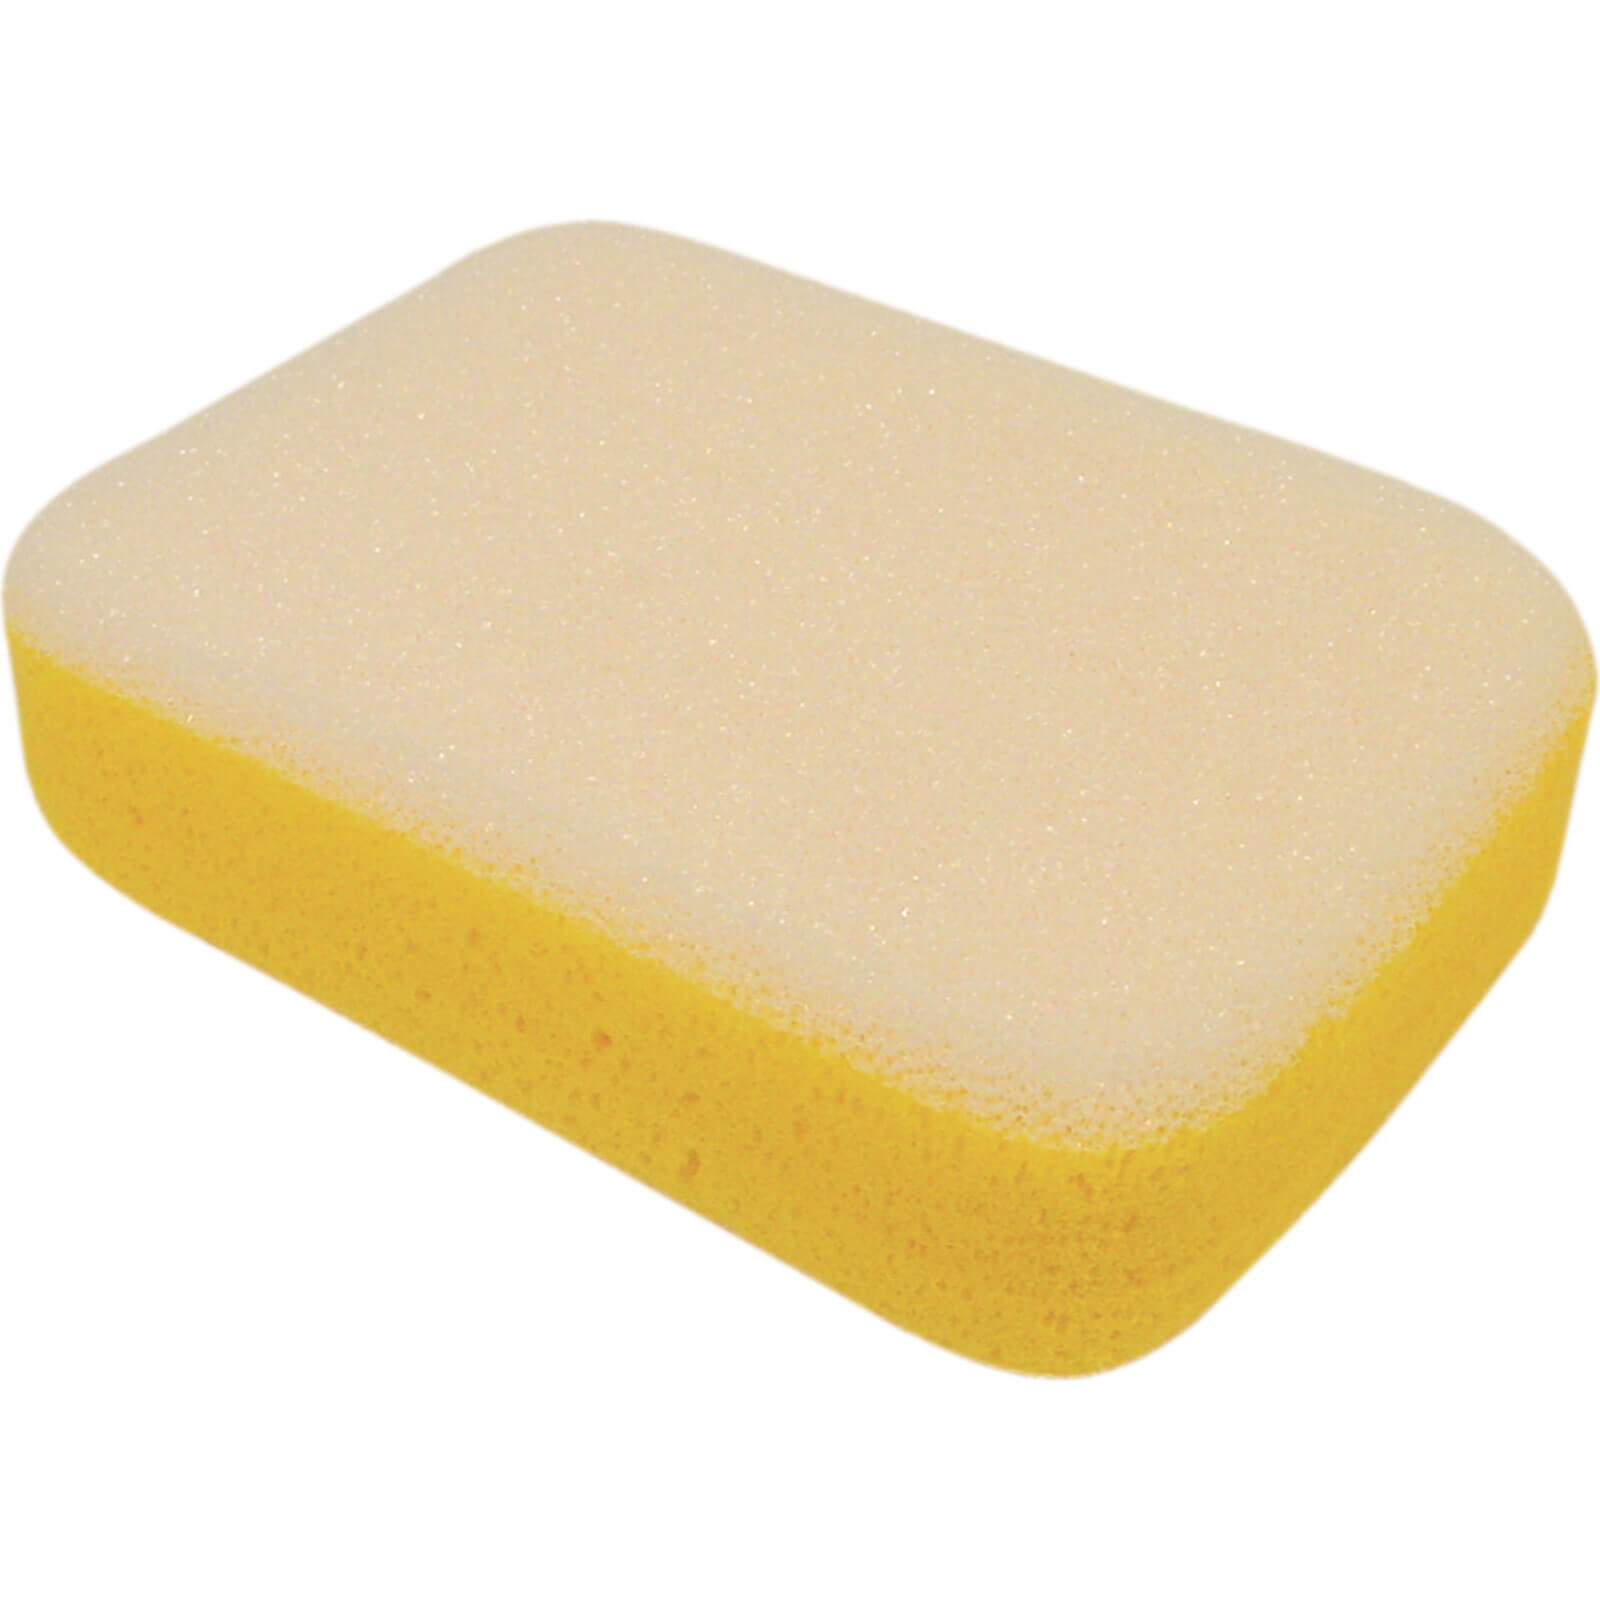 Image of Vitrex Grouting Sponge